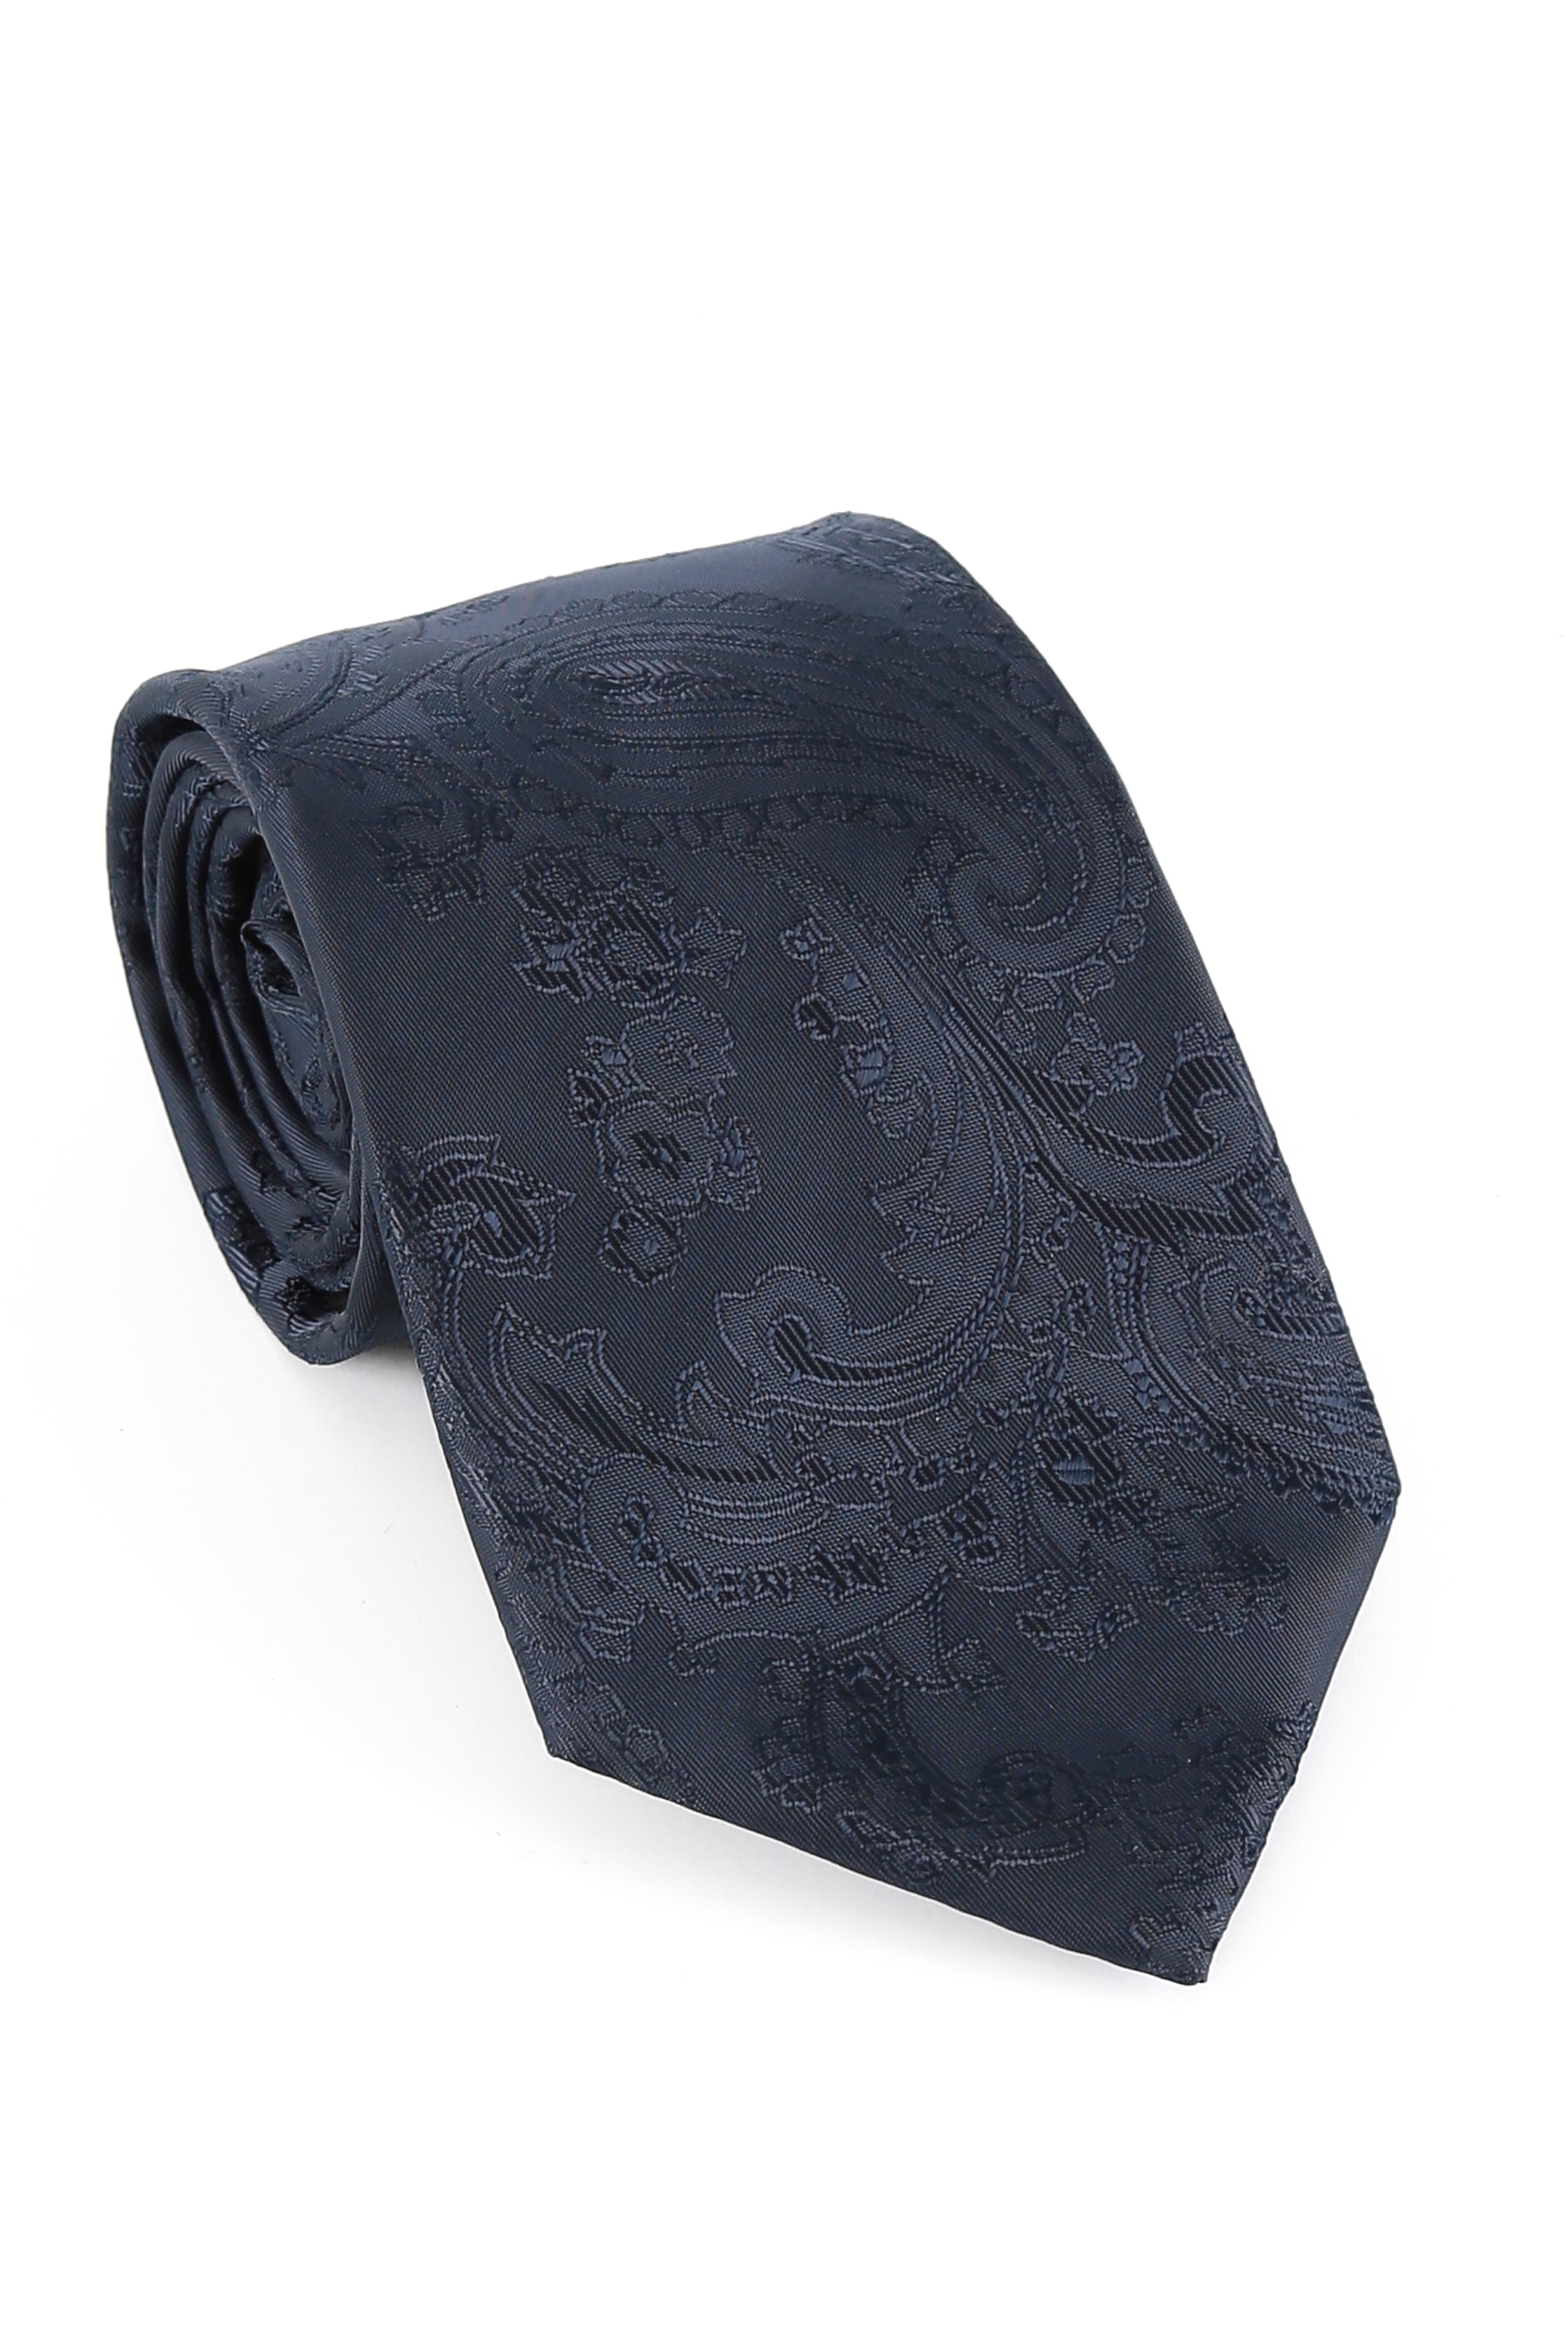 Men's Paisley Tie Cufflink Set - Navy Blue